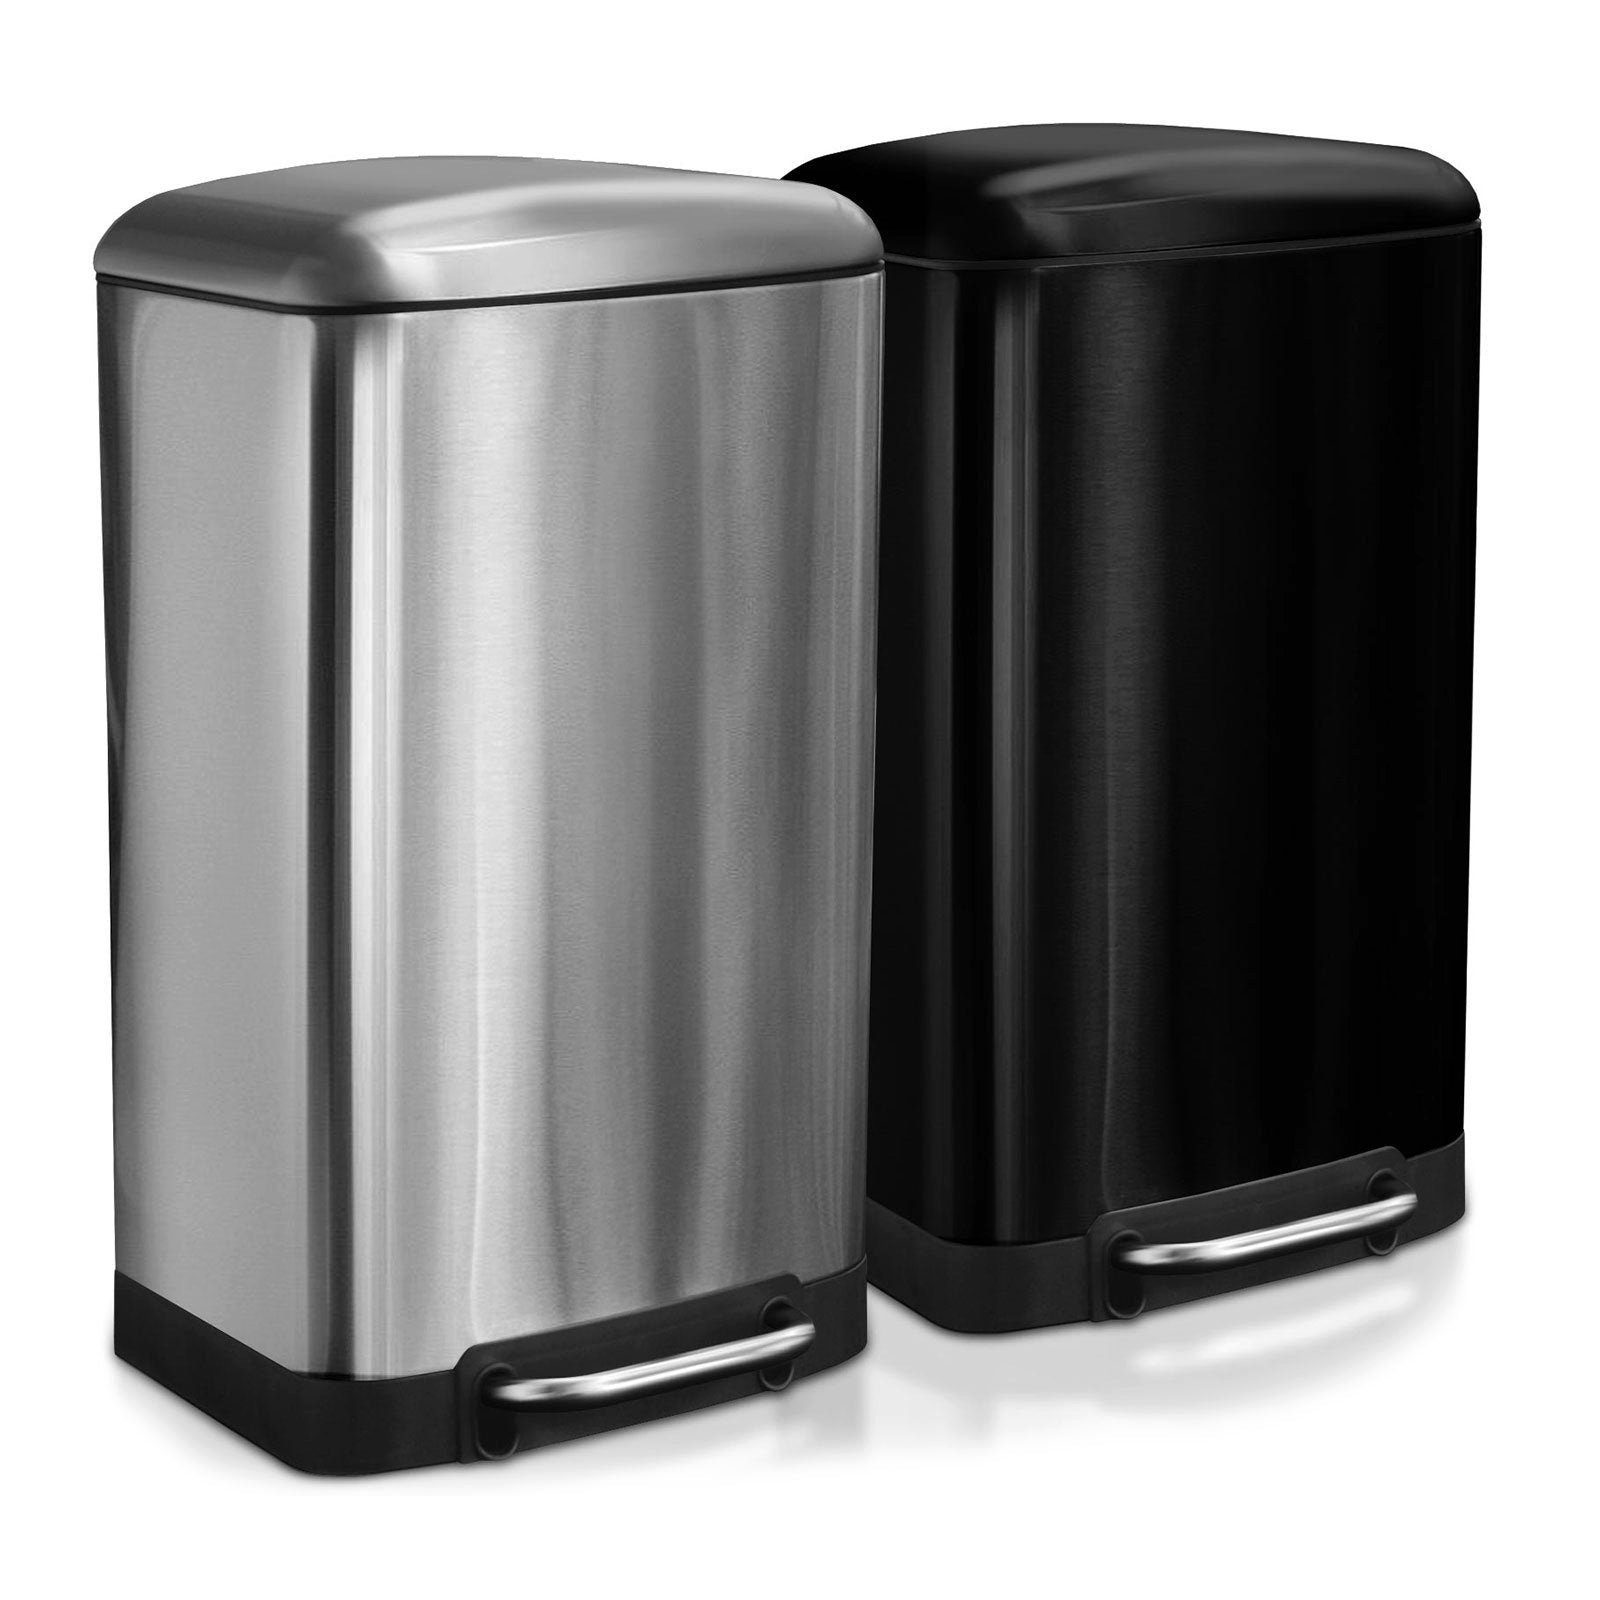 2 Mülleimer Edelstahl, Liter pura casa Farben, 30 Cubo, Silber Abfallbehälter aus